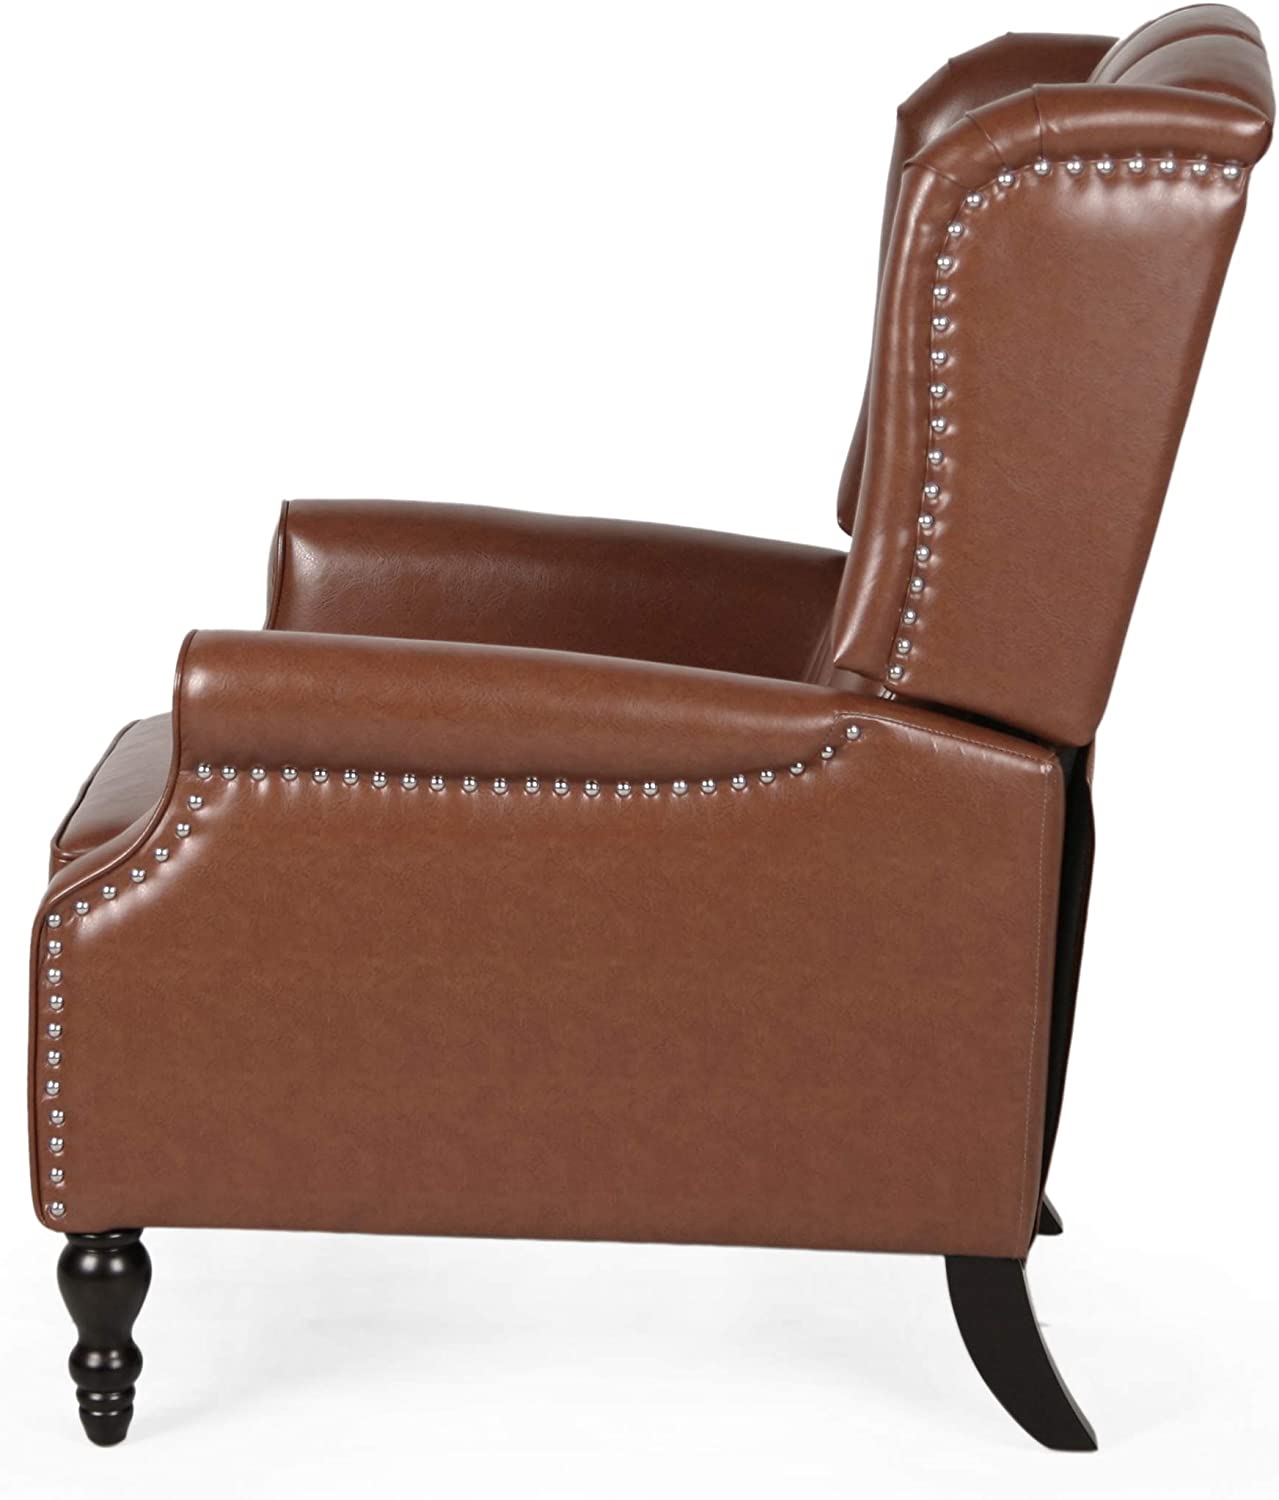 Contemporary Wide Tufted Recyliner Wooden Chair , Cognac Brown, Dark Brown